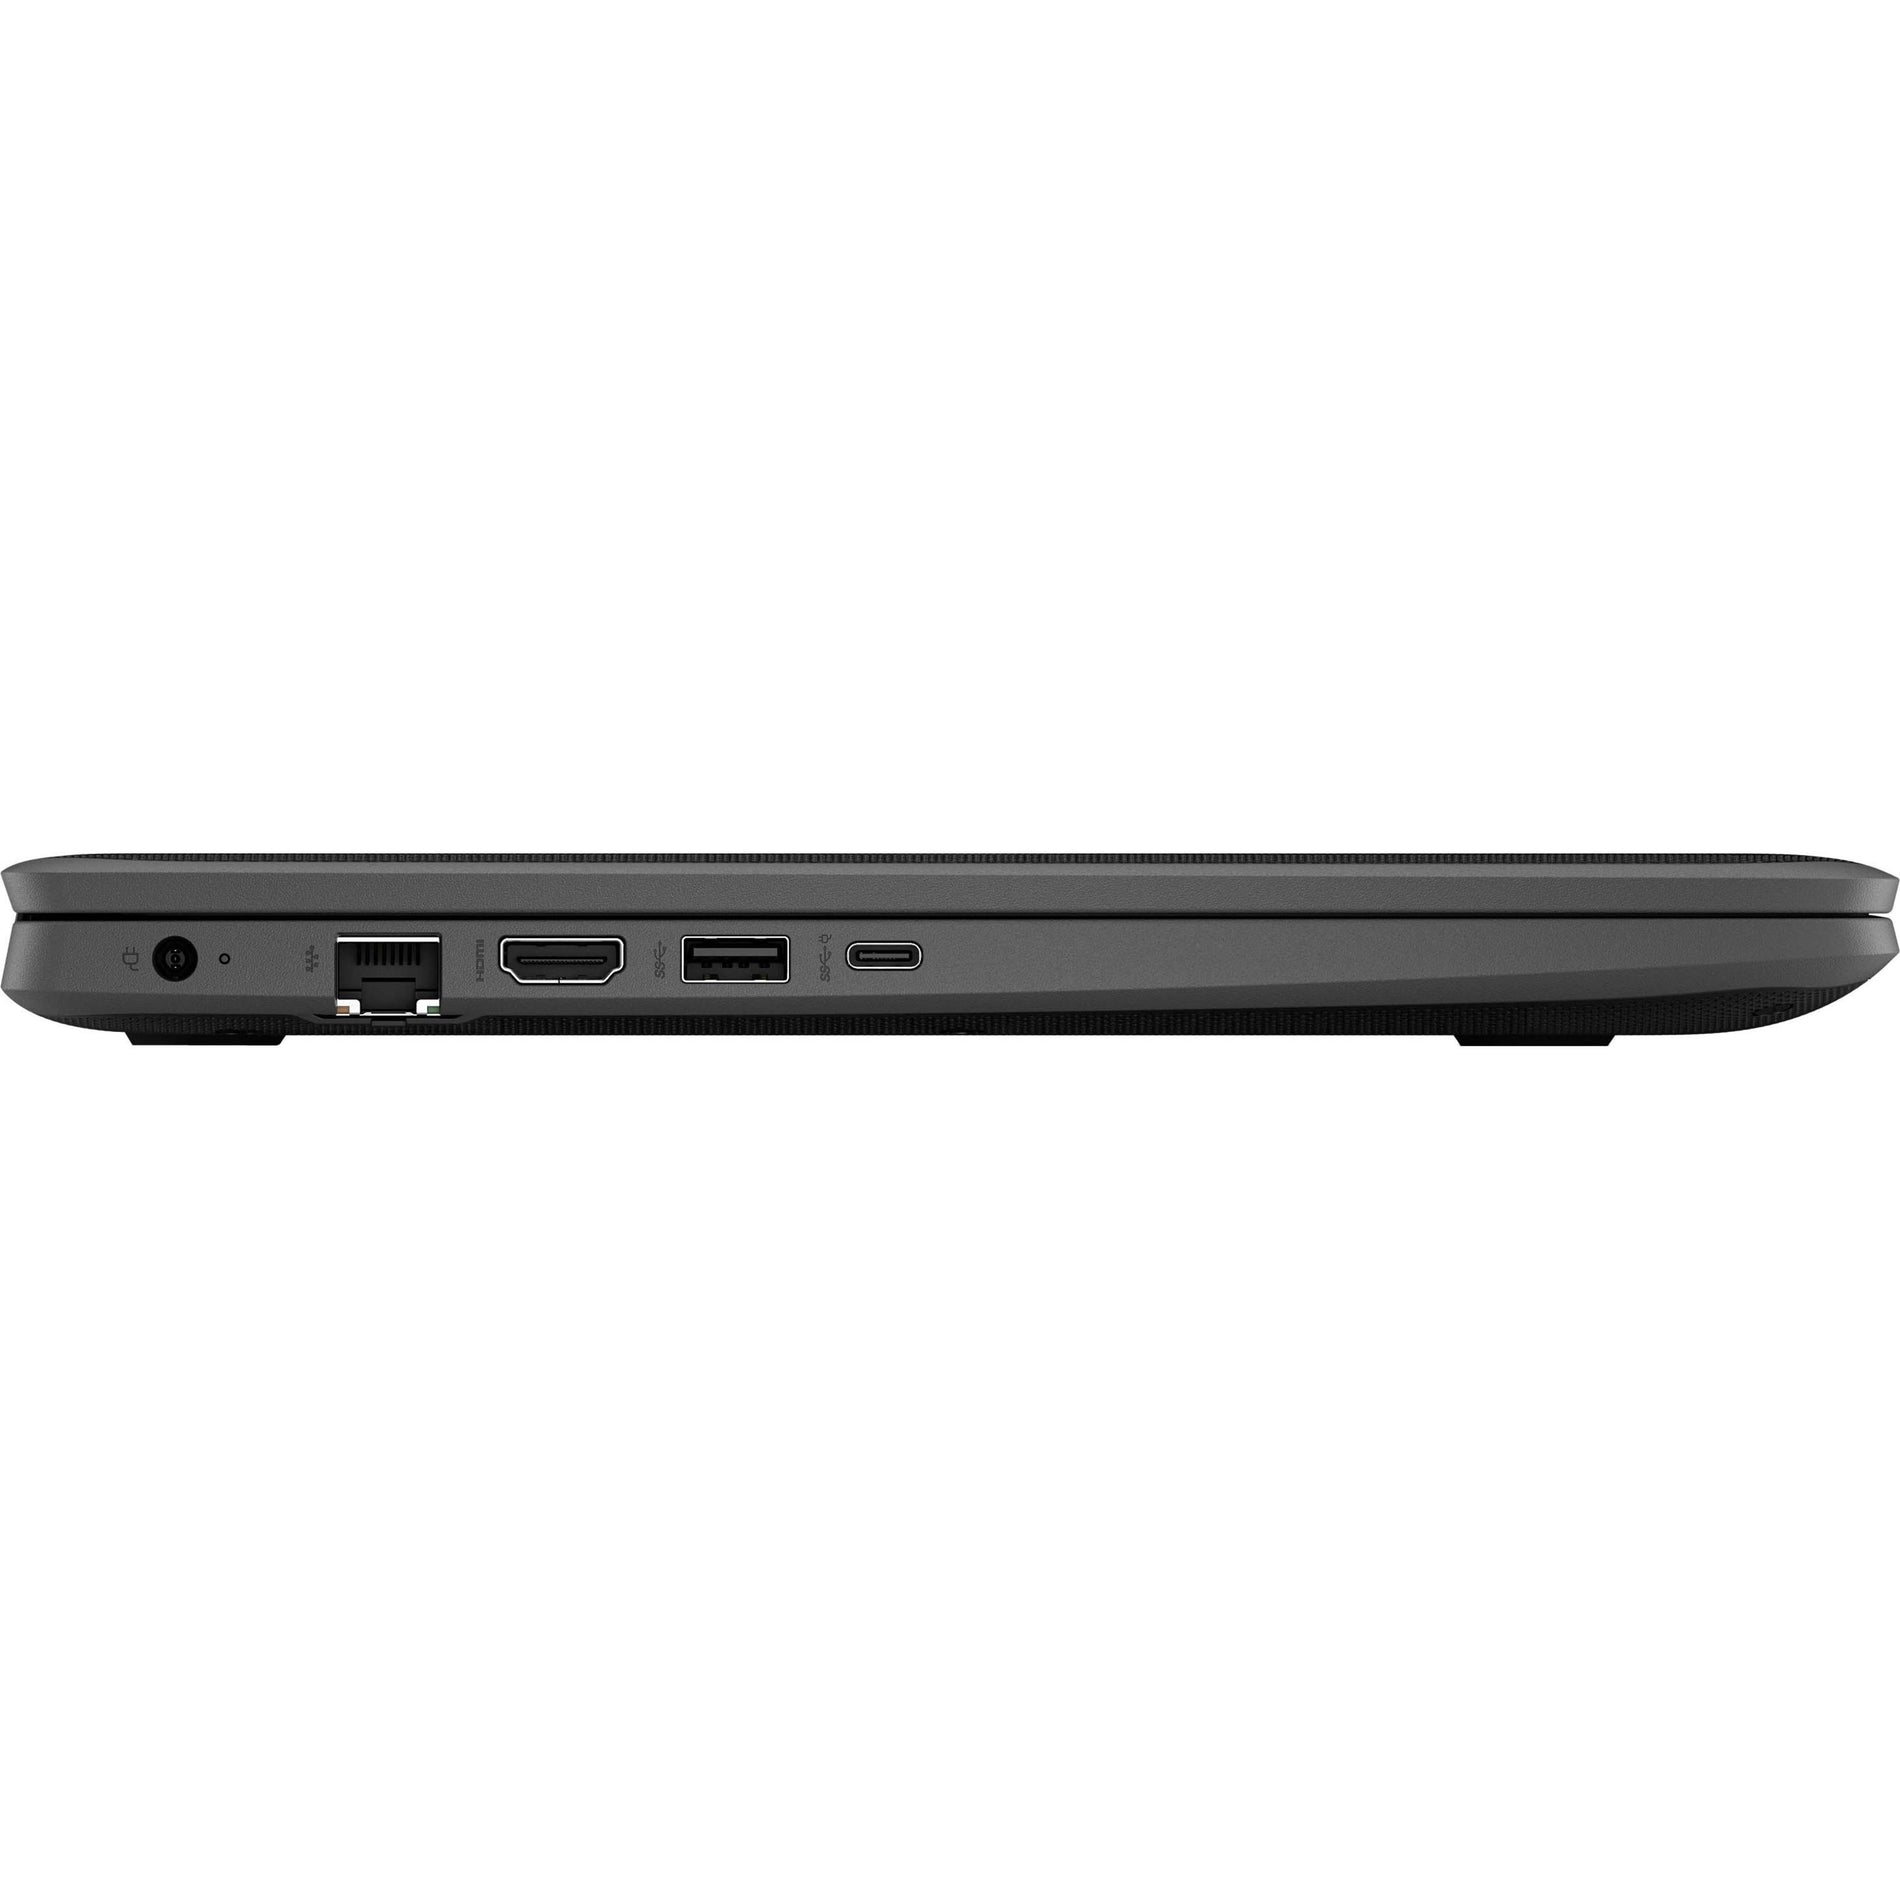 HP ProBook Fortis 14 inch G9 Notebook PC, HD Display, Intel Celeron N4500, 4GB RAM, 64GB Flash Memory